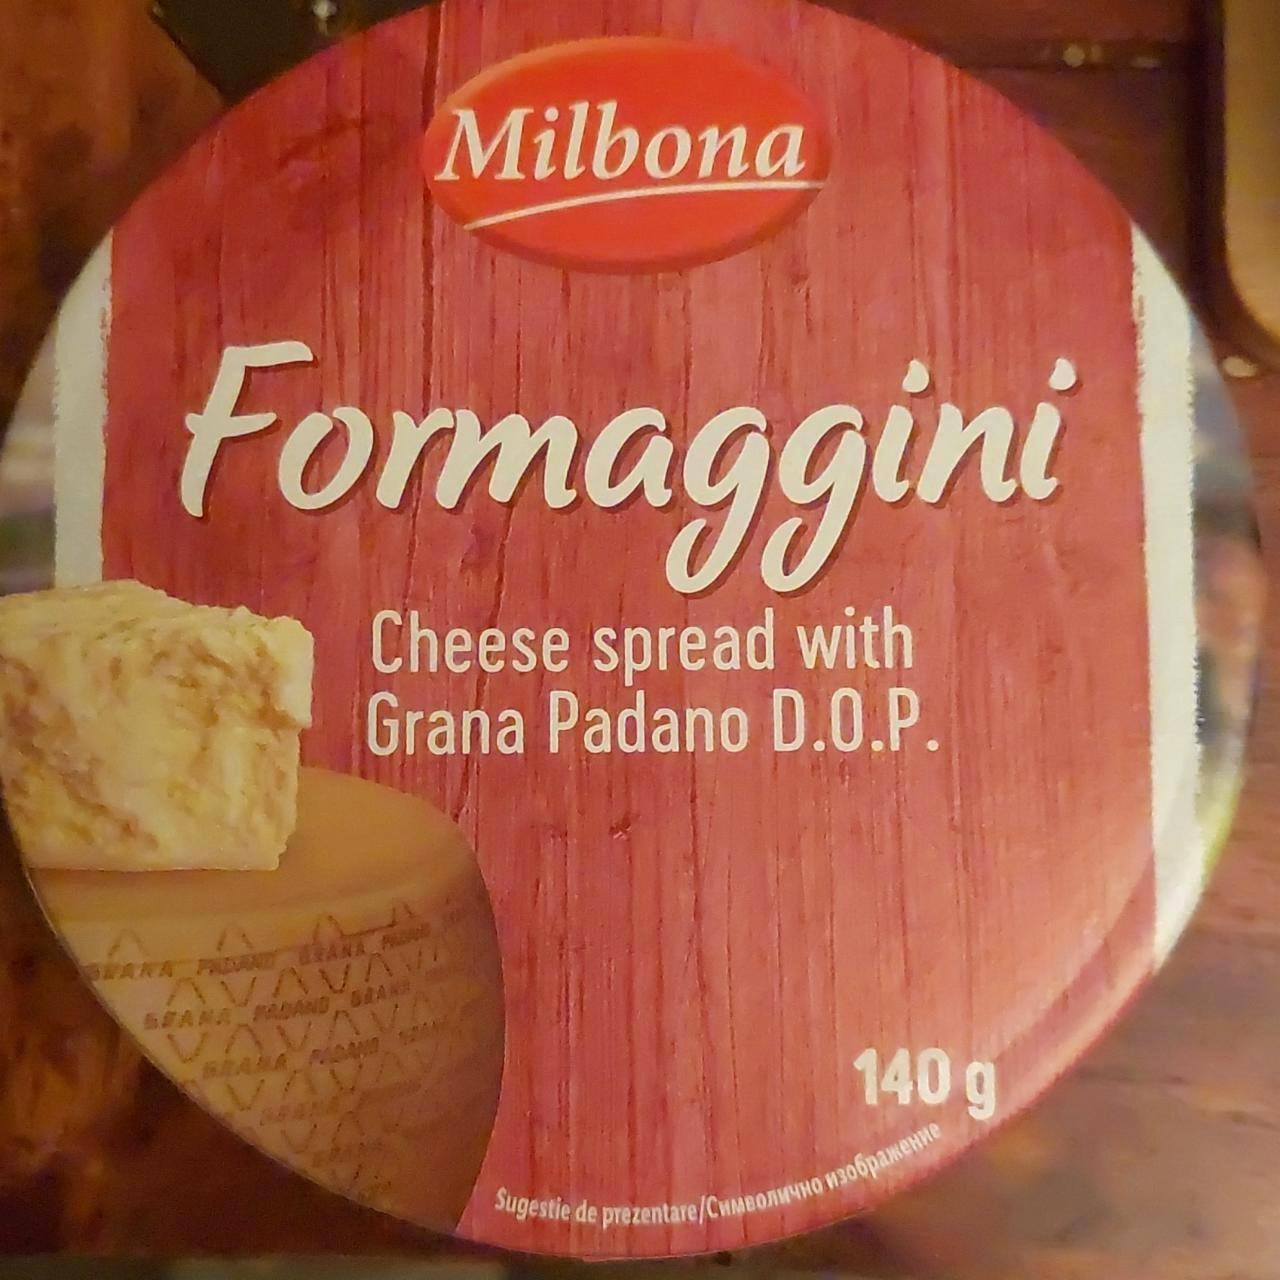 Képek - Formaggini cheese spread Milbona